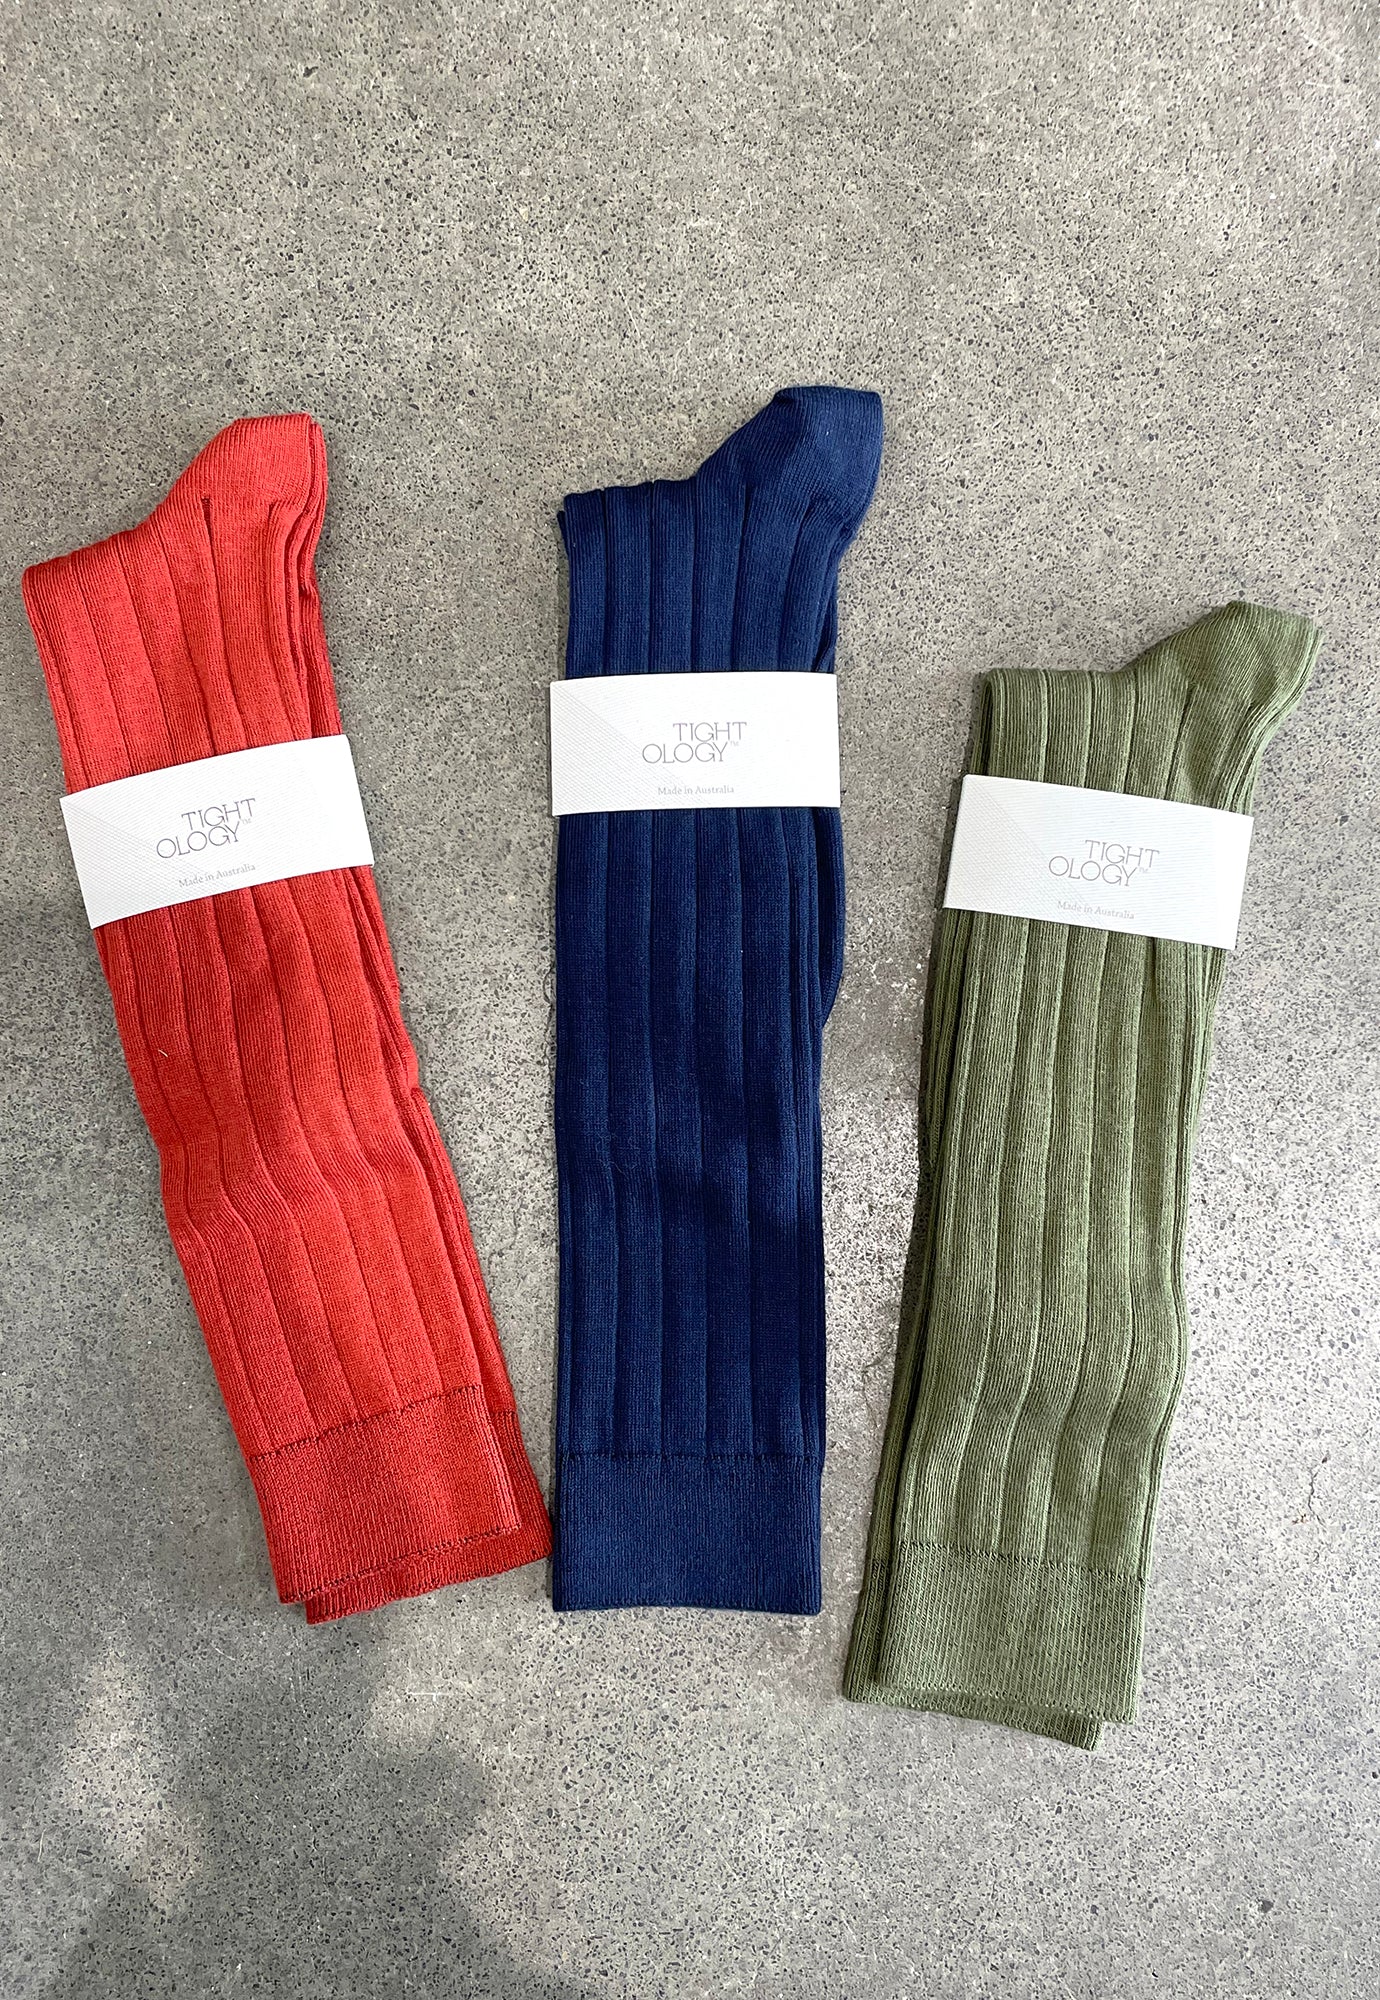 tightology - long linea socks